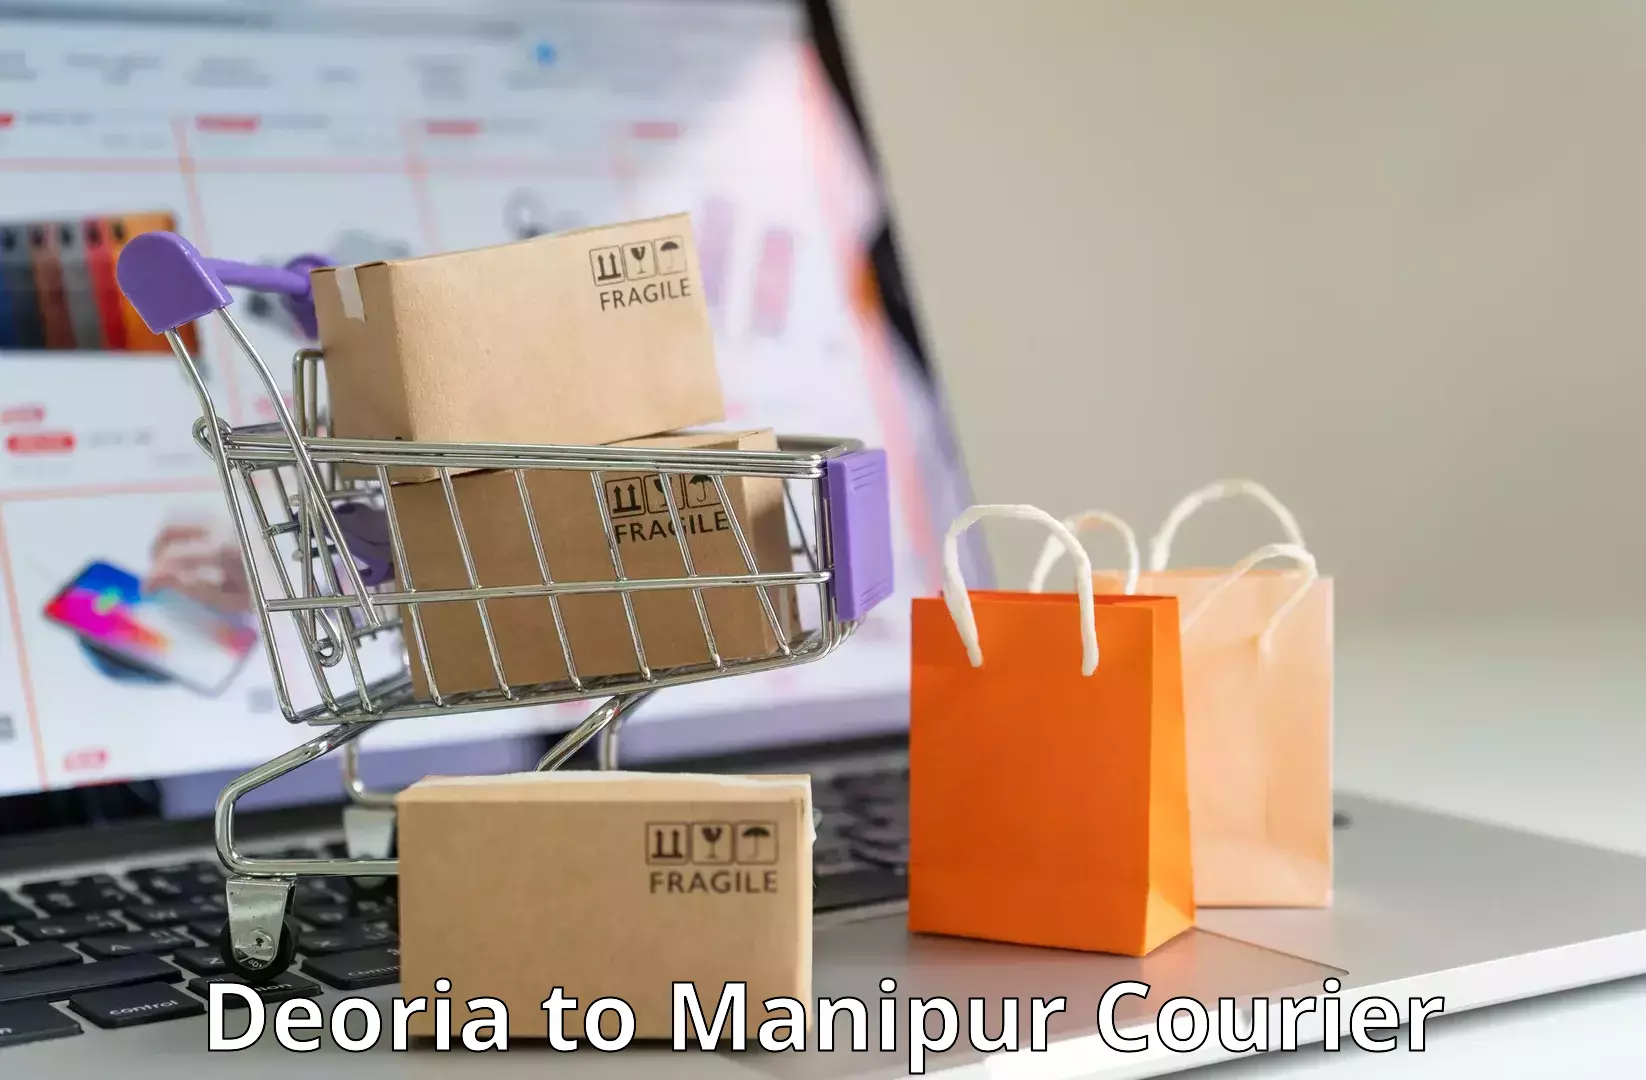 Courier service comparison Deoria to Imphal